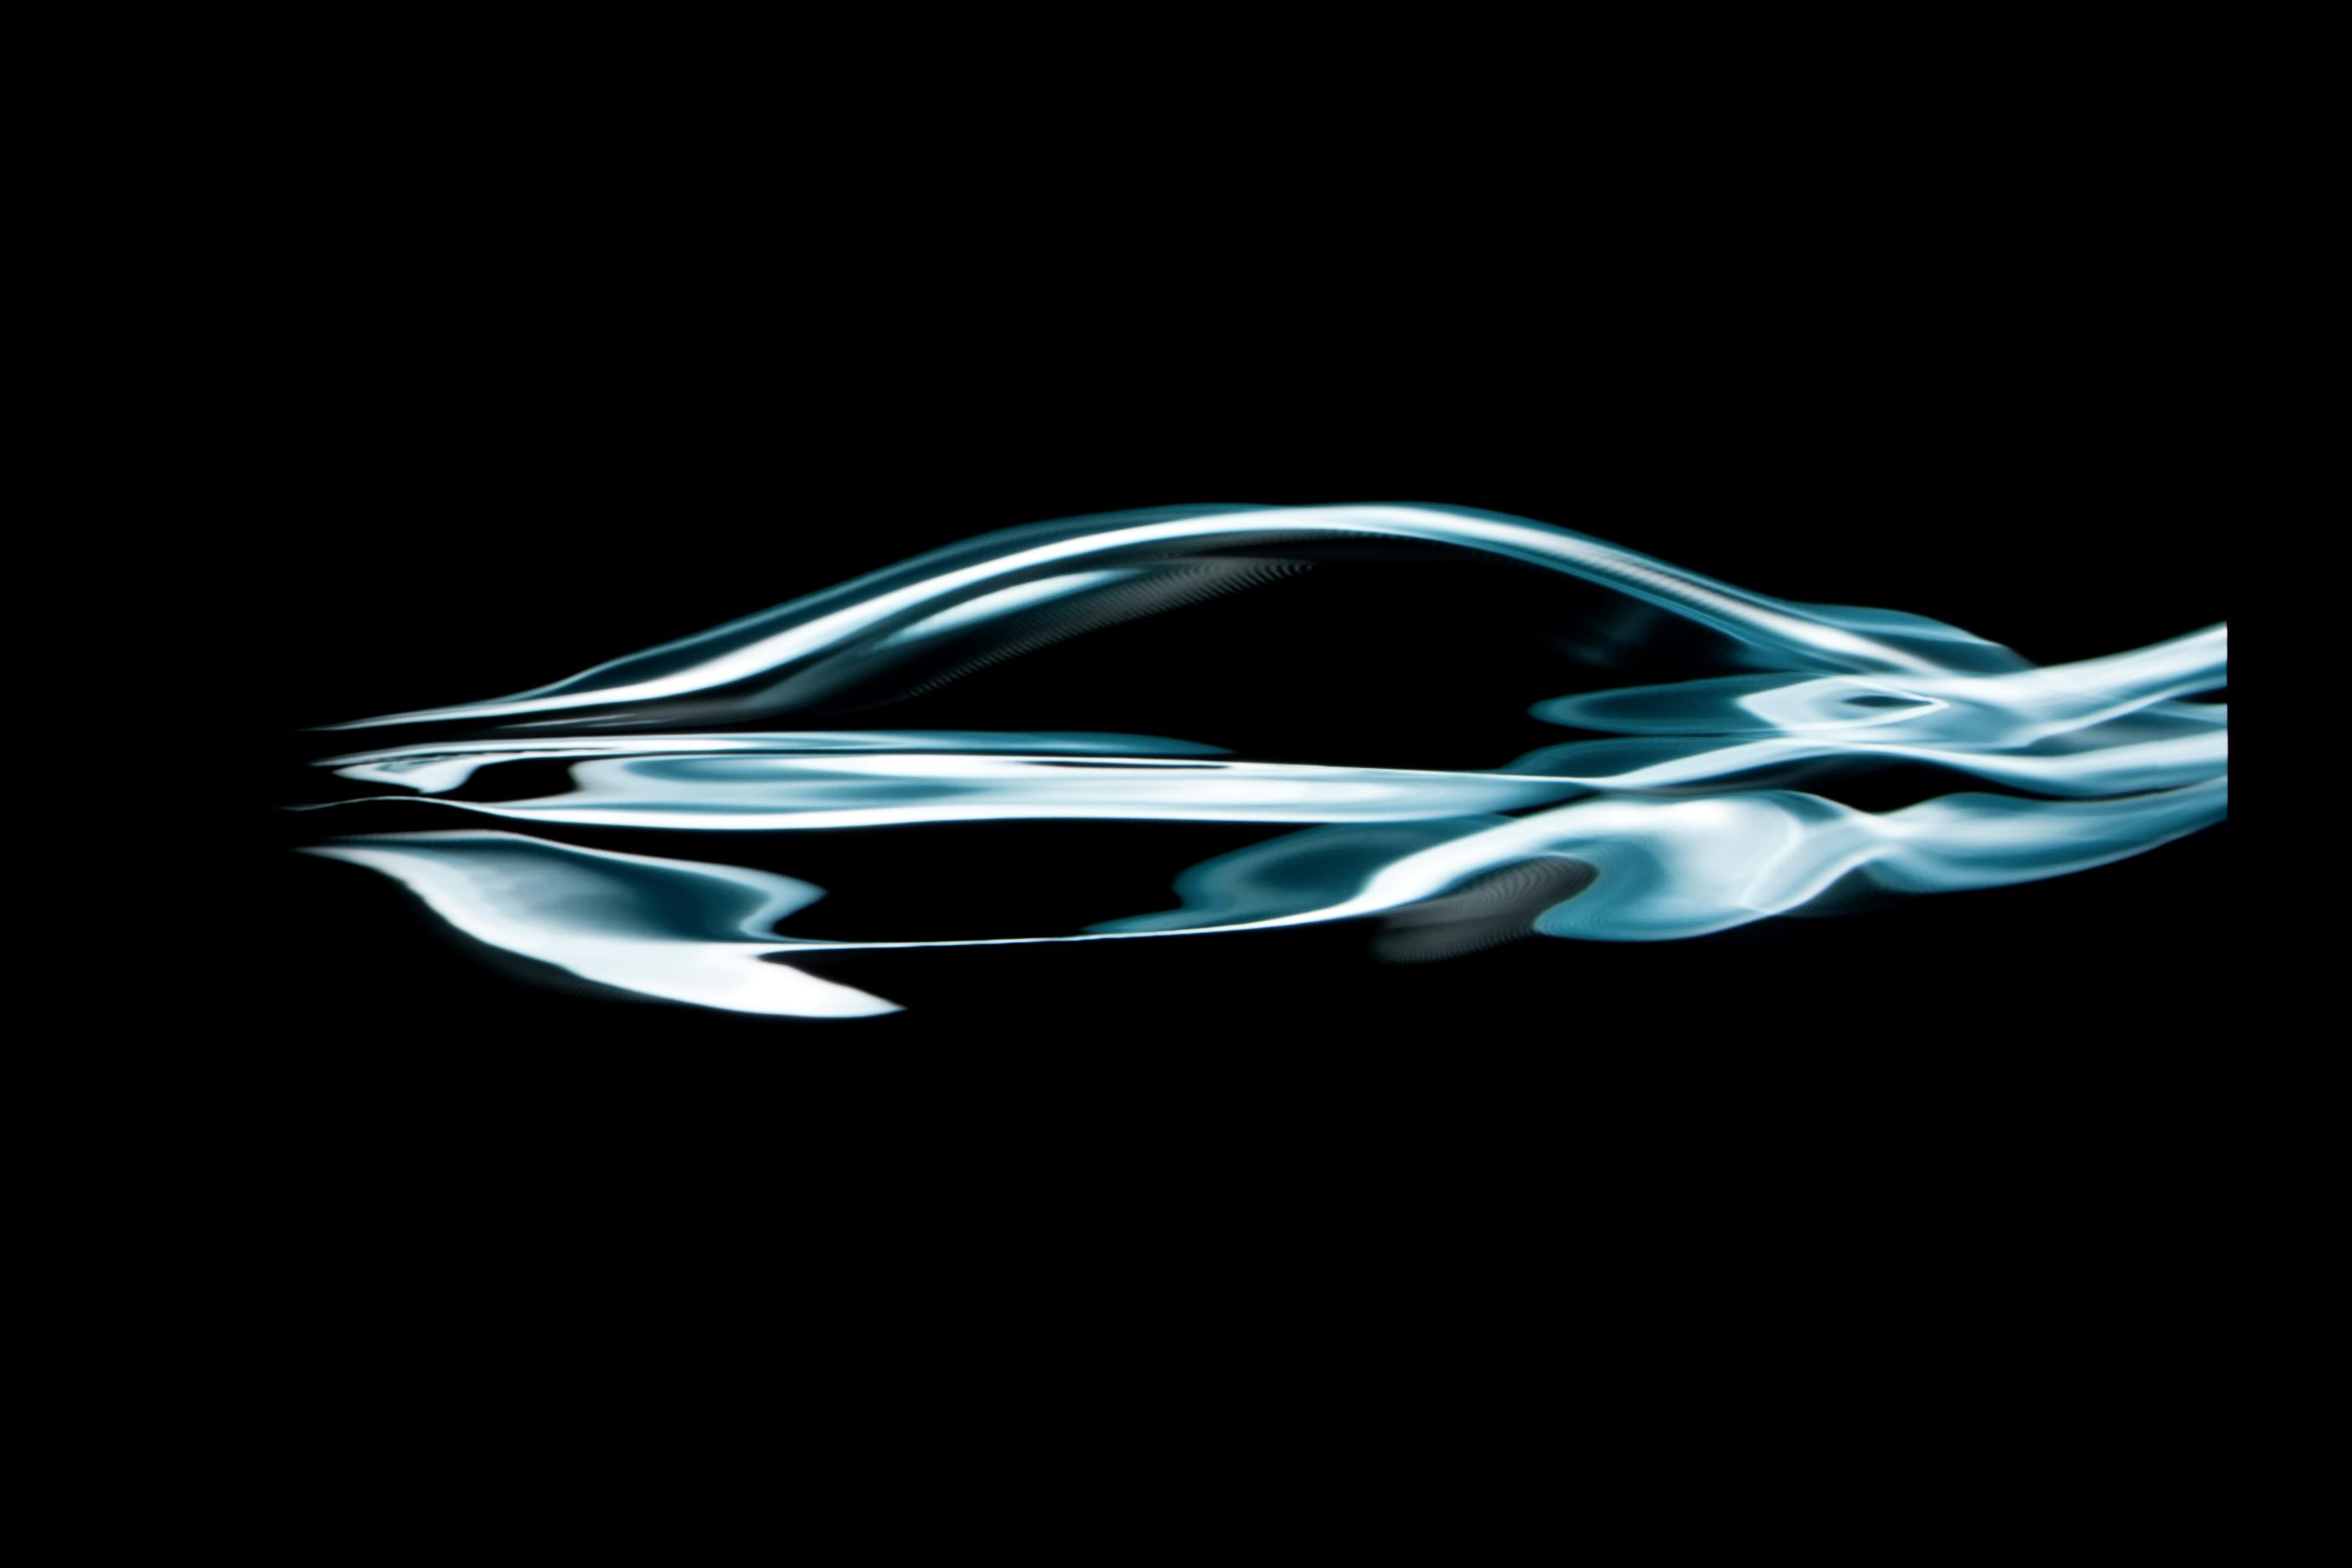 Mercedes-Benz S-Class Aesthetics S Project